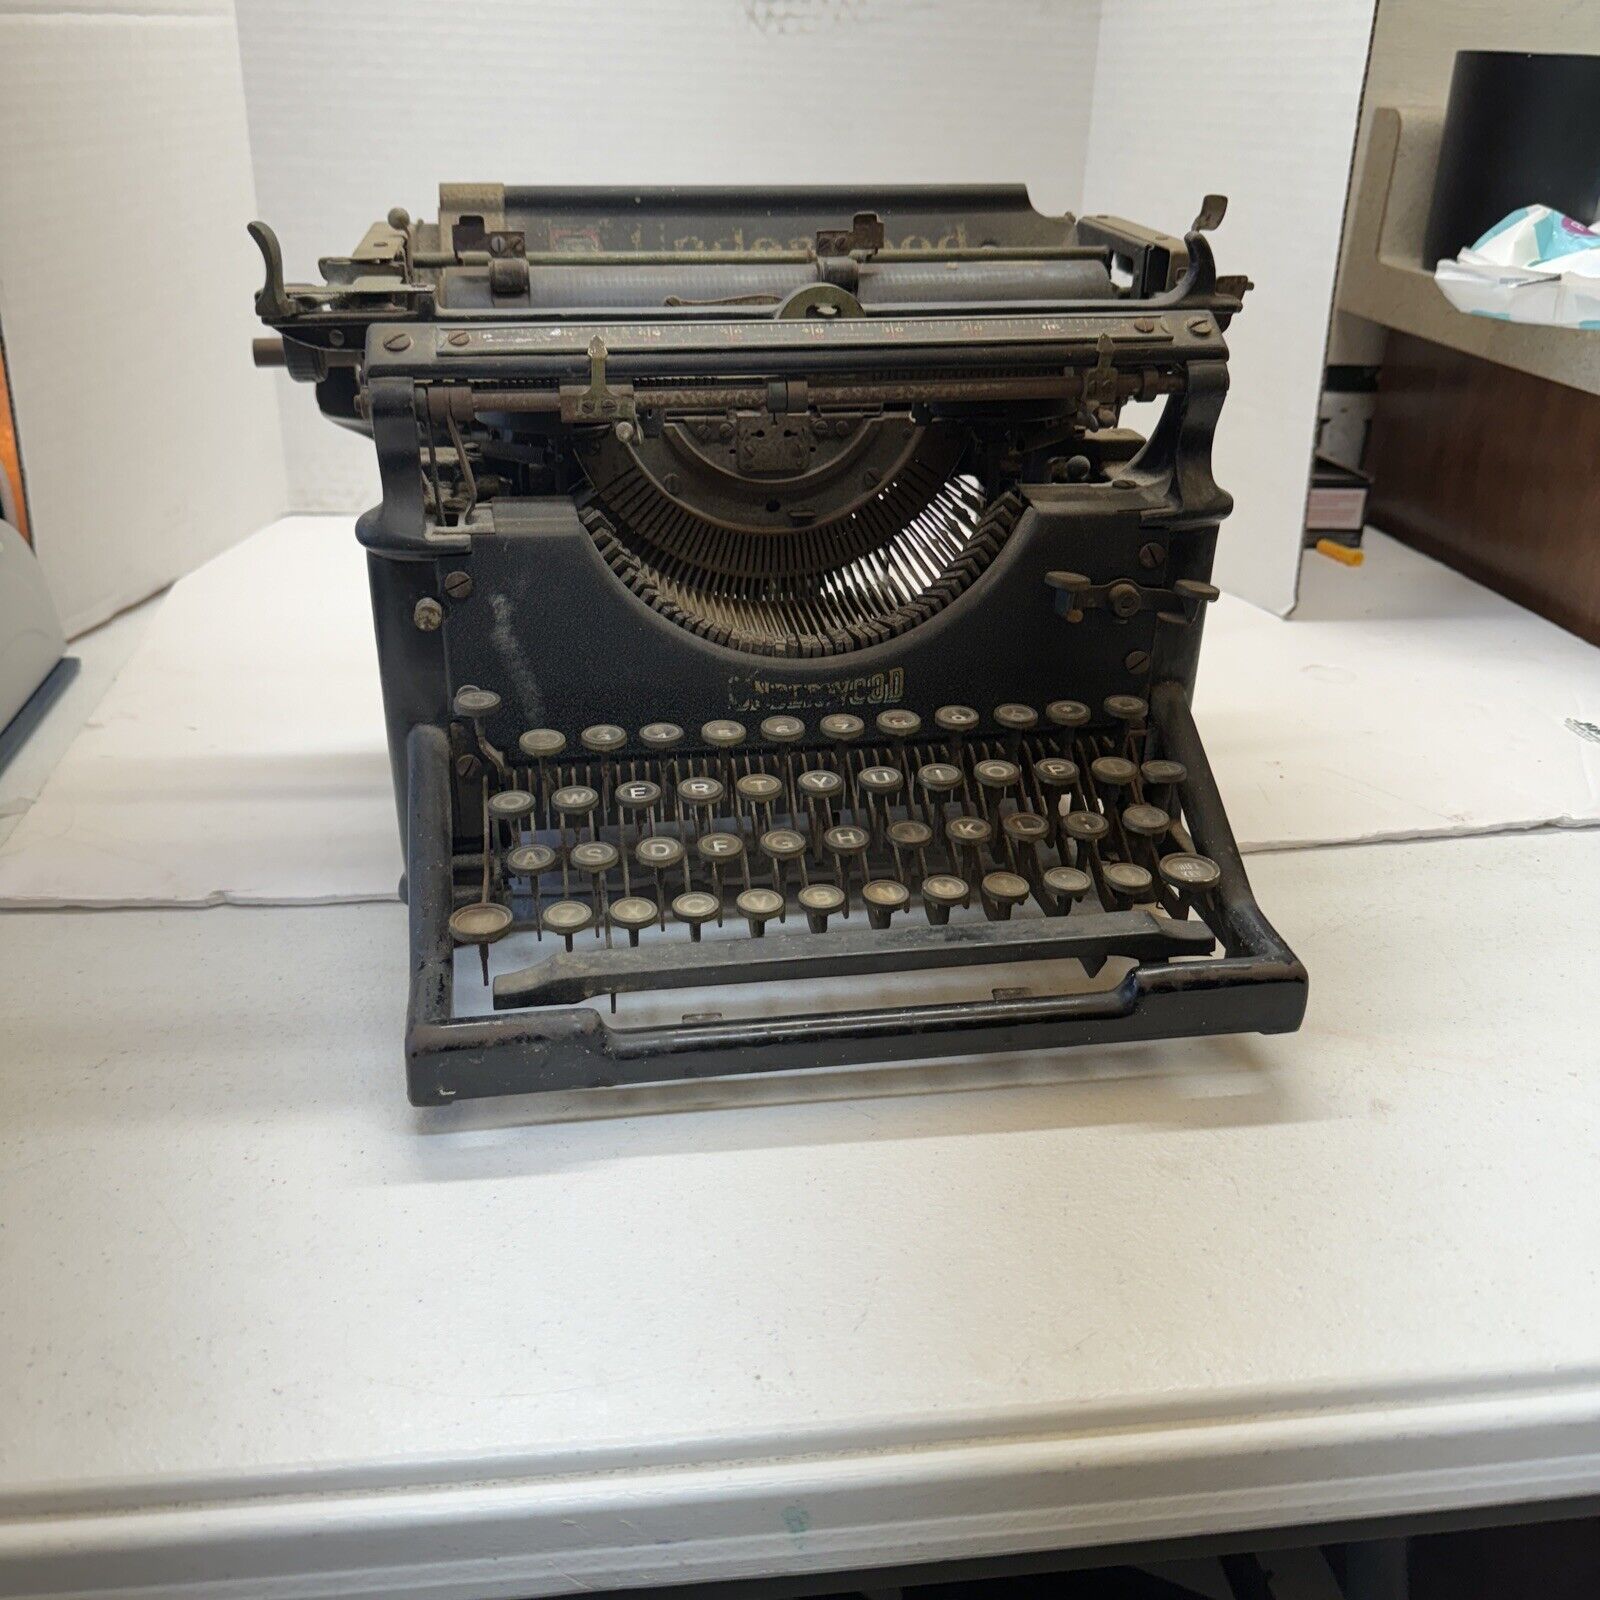 Vintage Underwood Typewriter - black, not portable